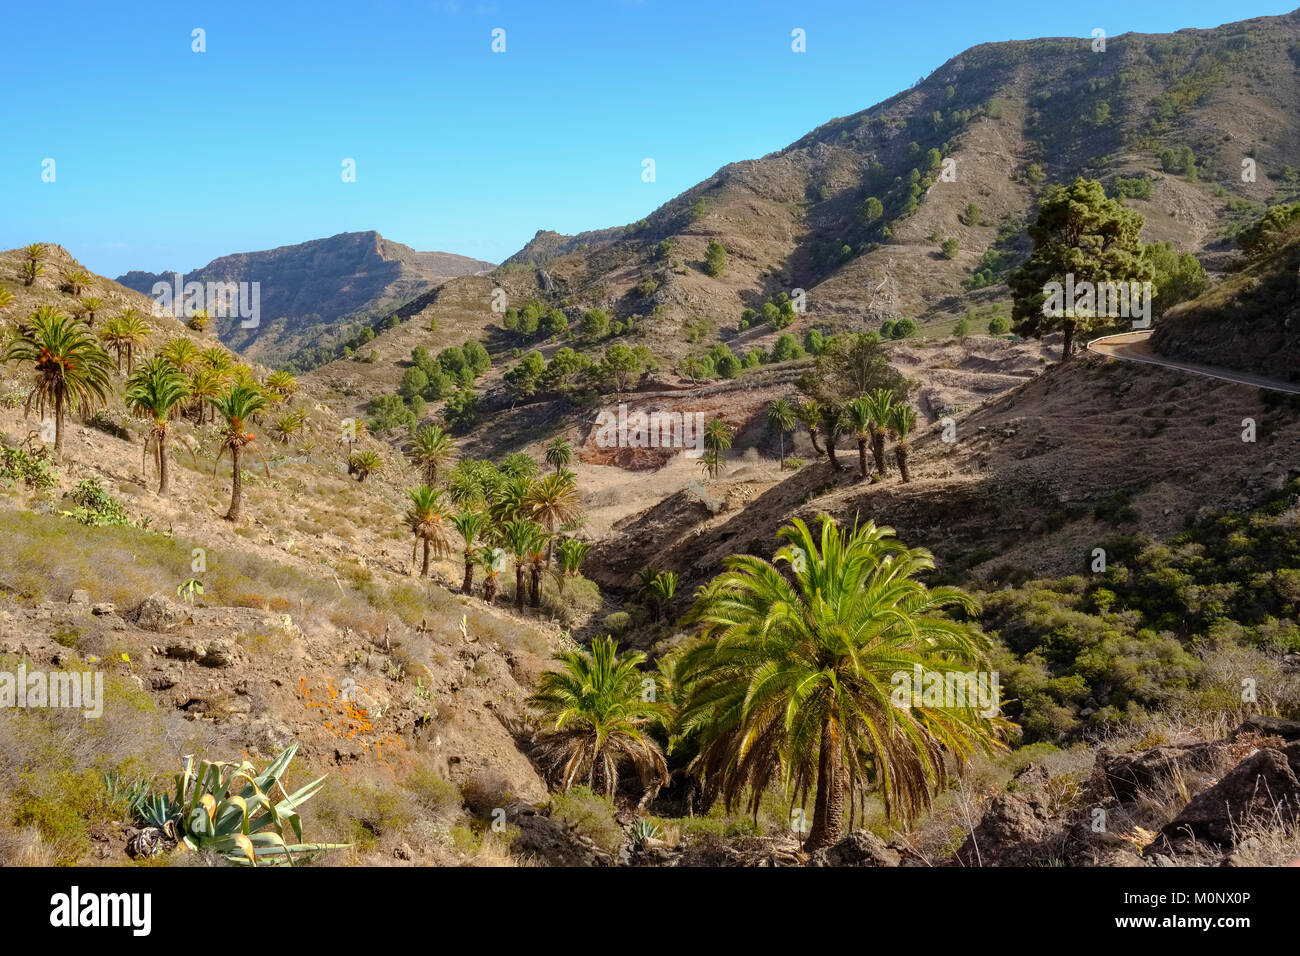 Mountain landscape with Canary Island date palms (Phoenix canariensis),Enchereda,Parque Natural de Majona,near San Sebastian Stock Photo